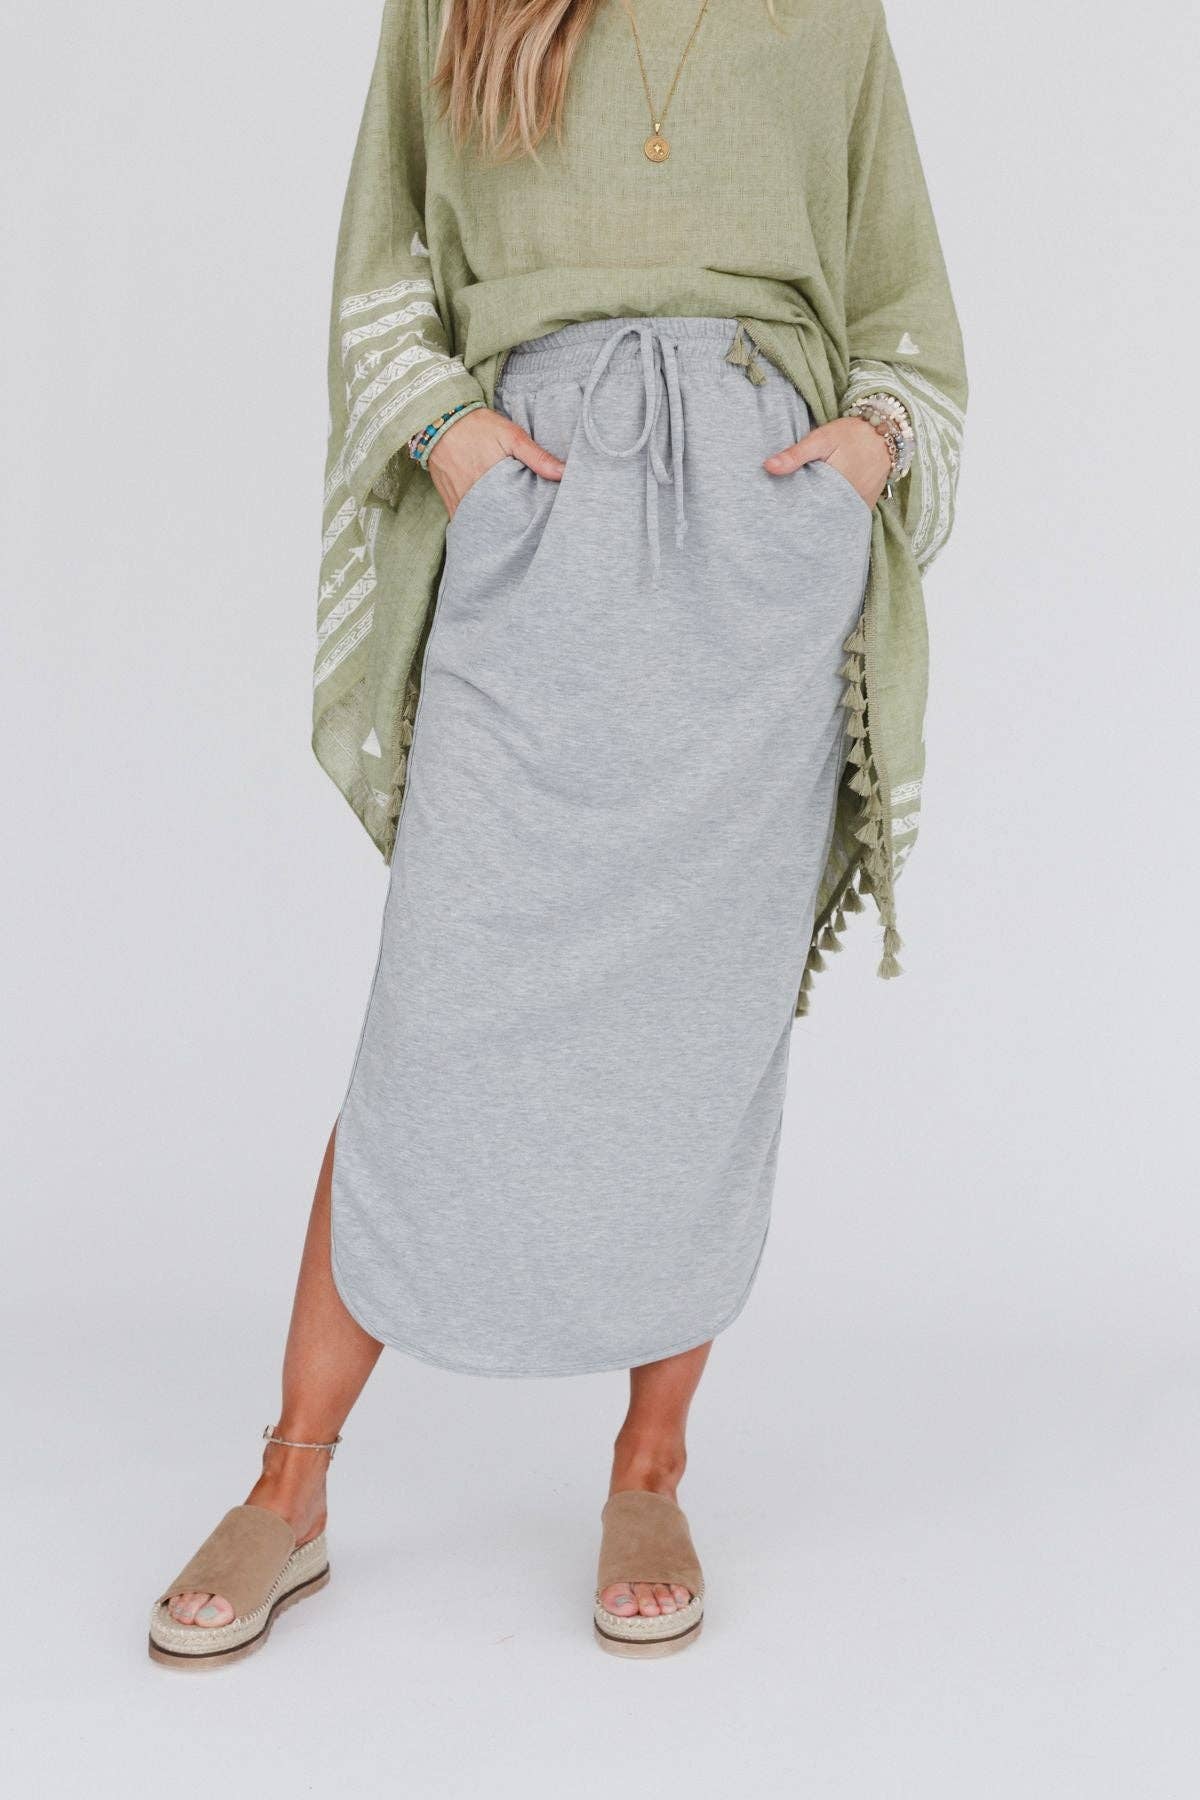 So Comfy Drawstring Maxi Skirt - Heather Gray